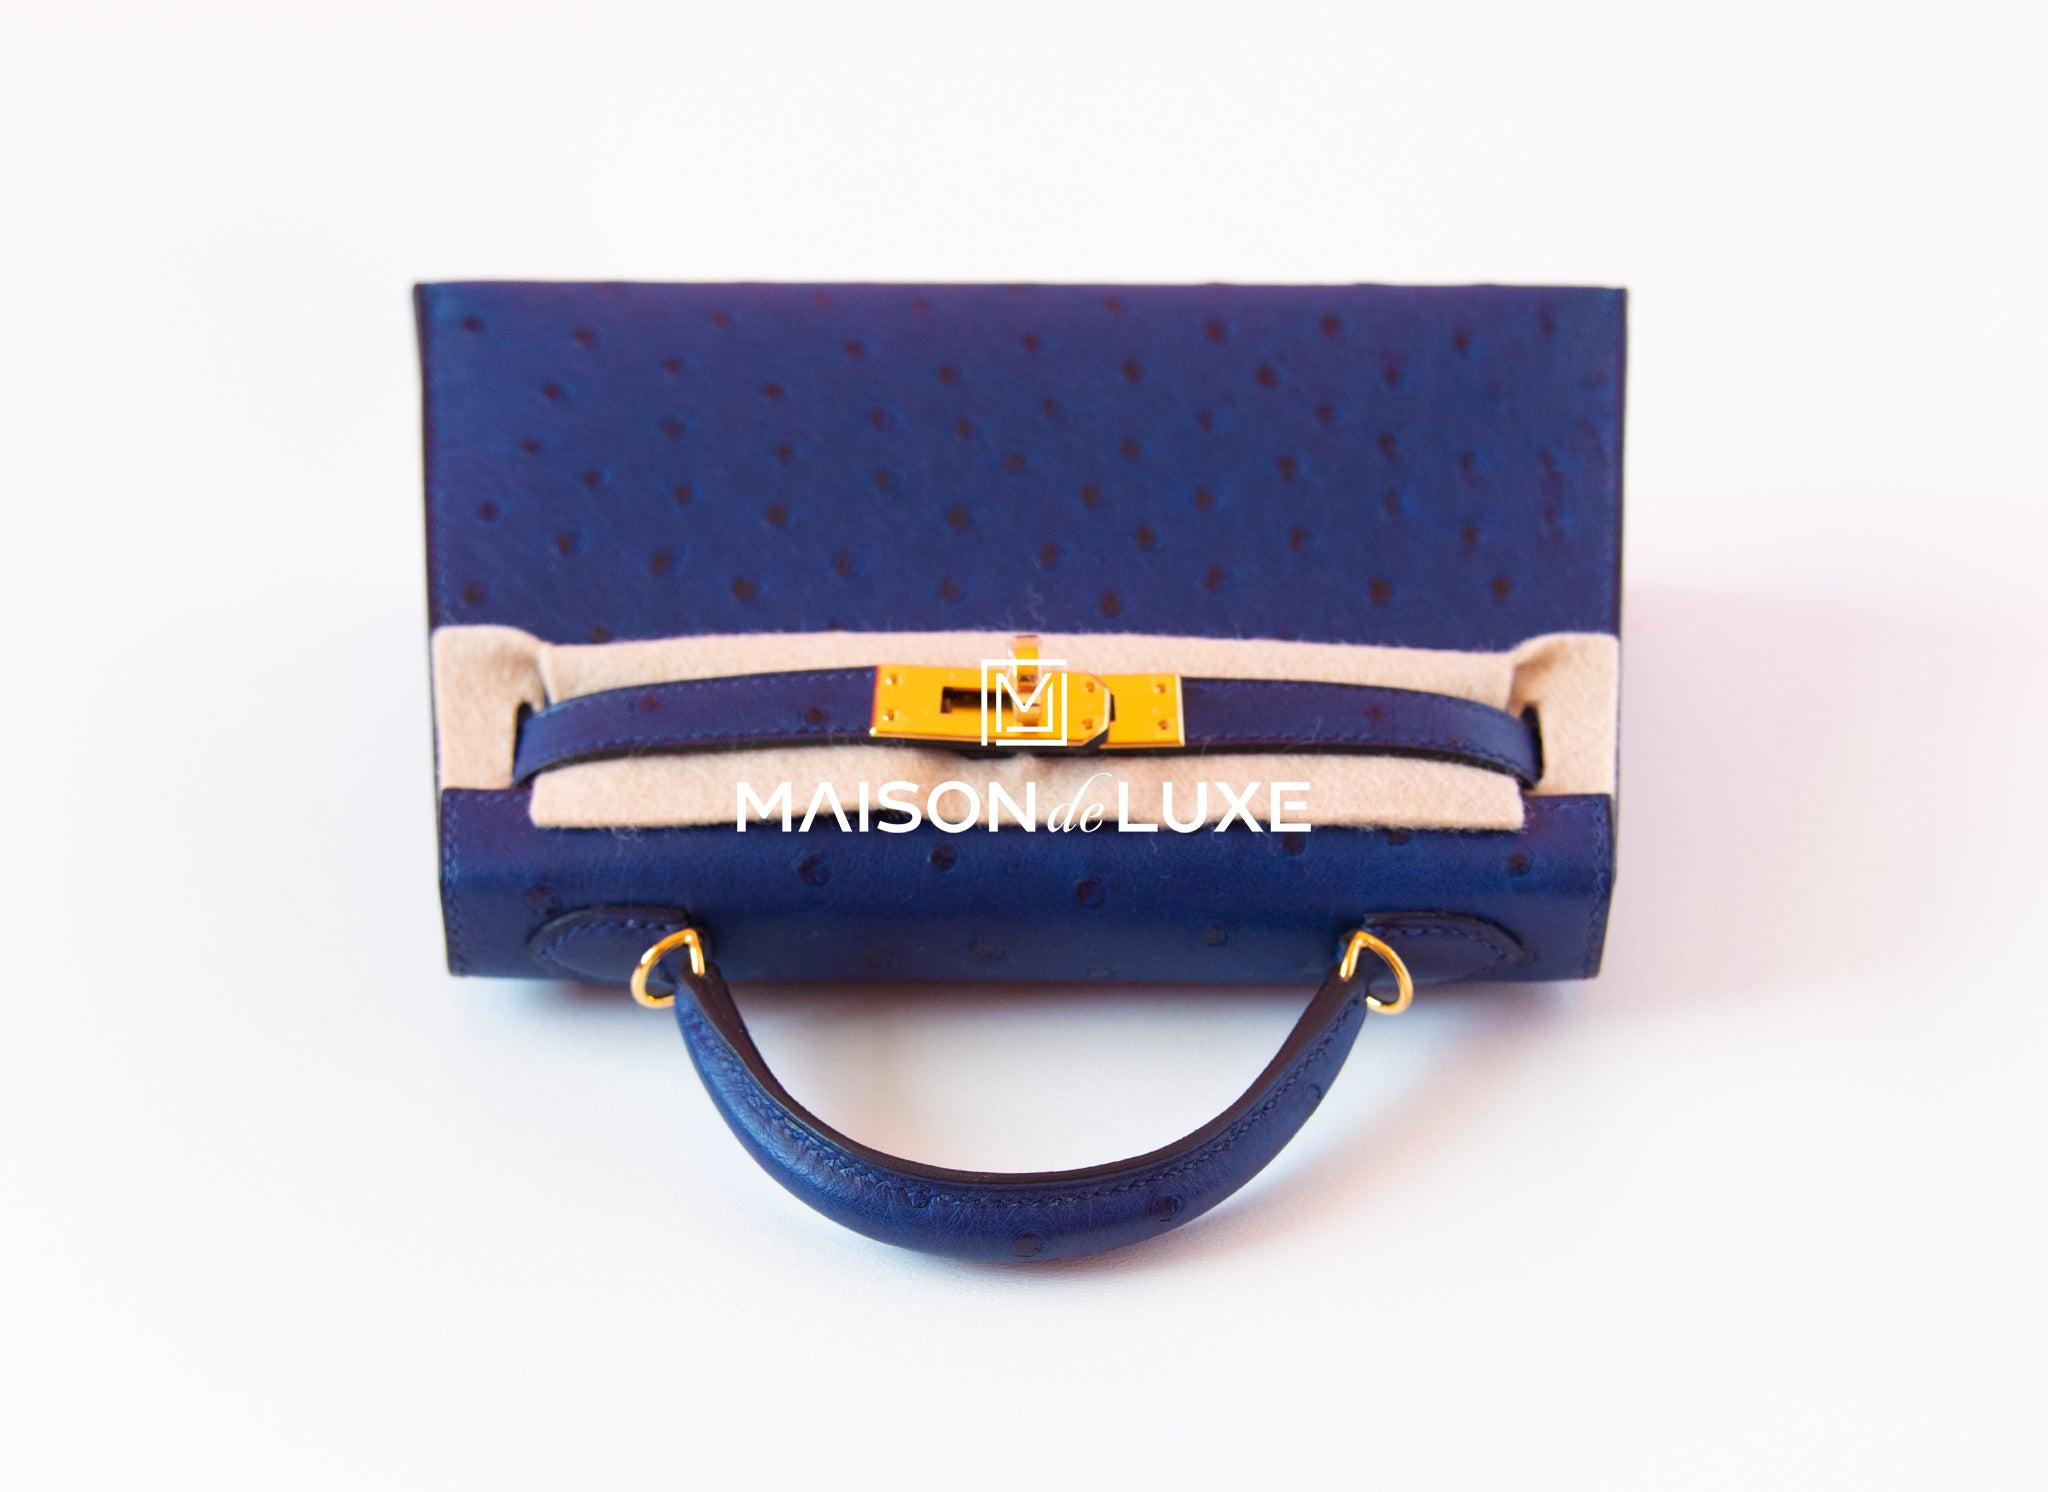 Hermès Kelly Sellier 28 Blue Iris Ostrich Bag